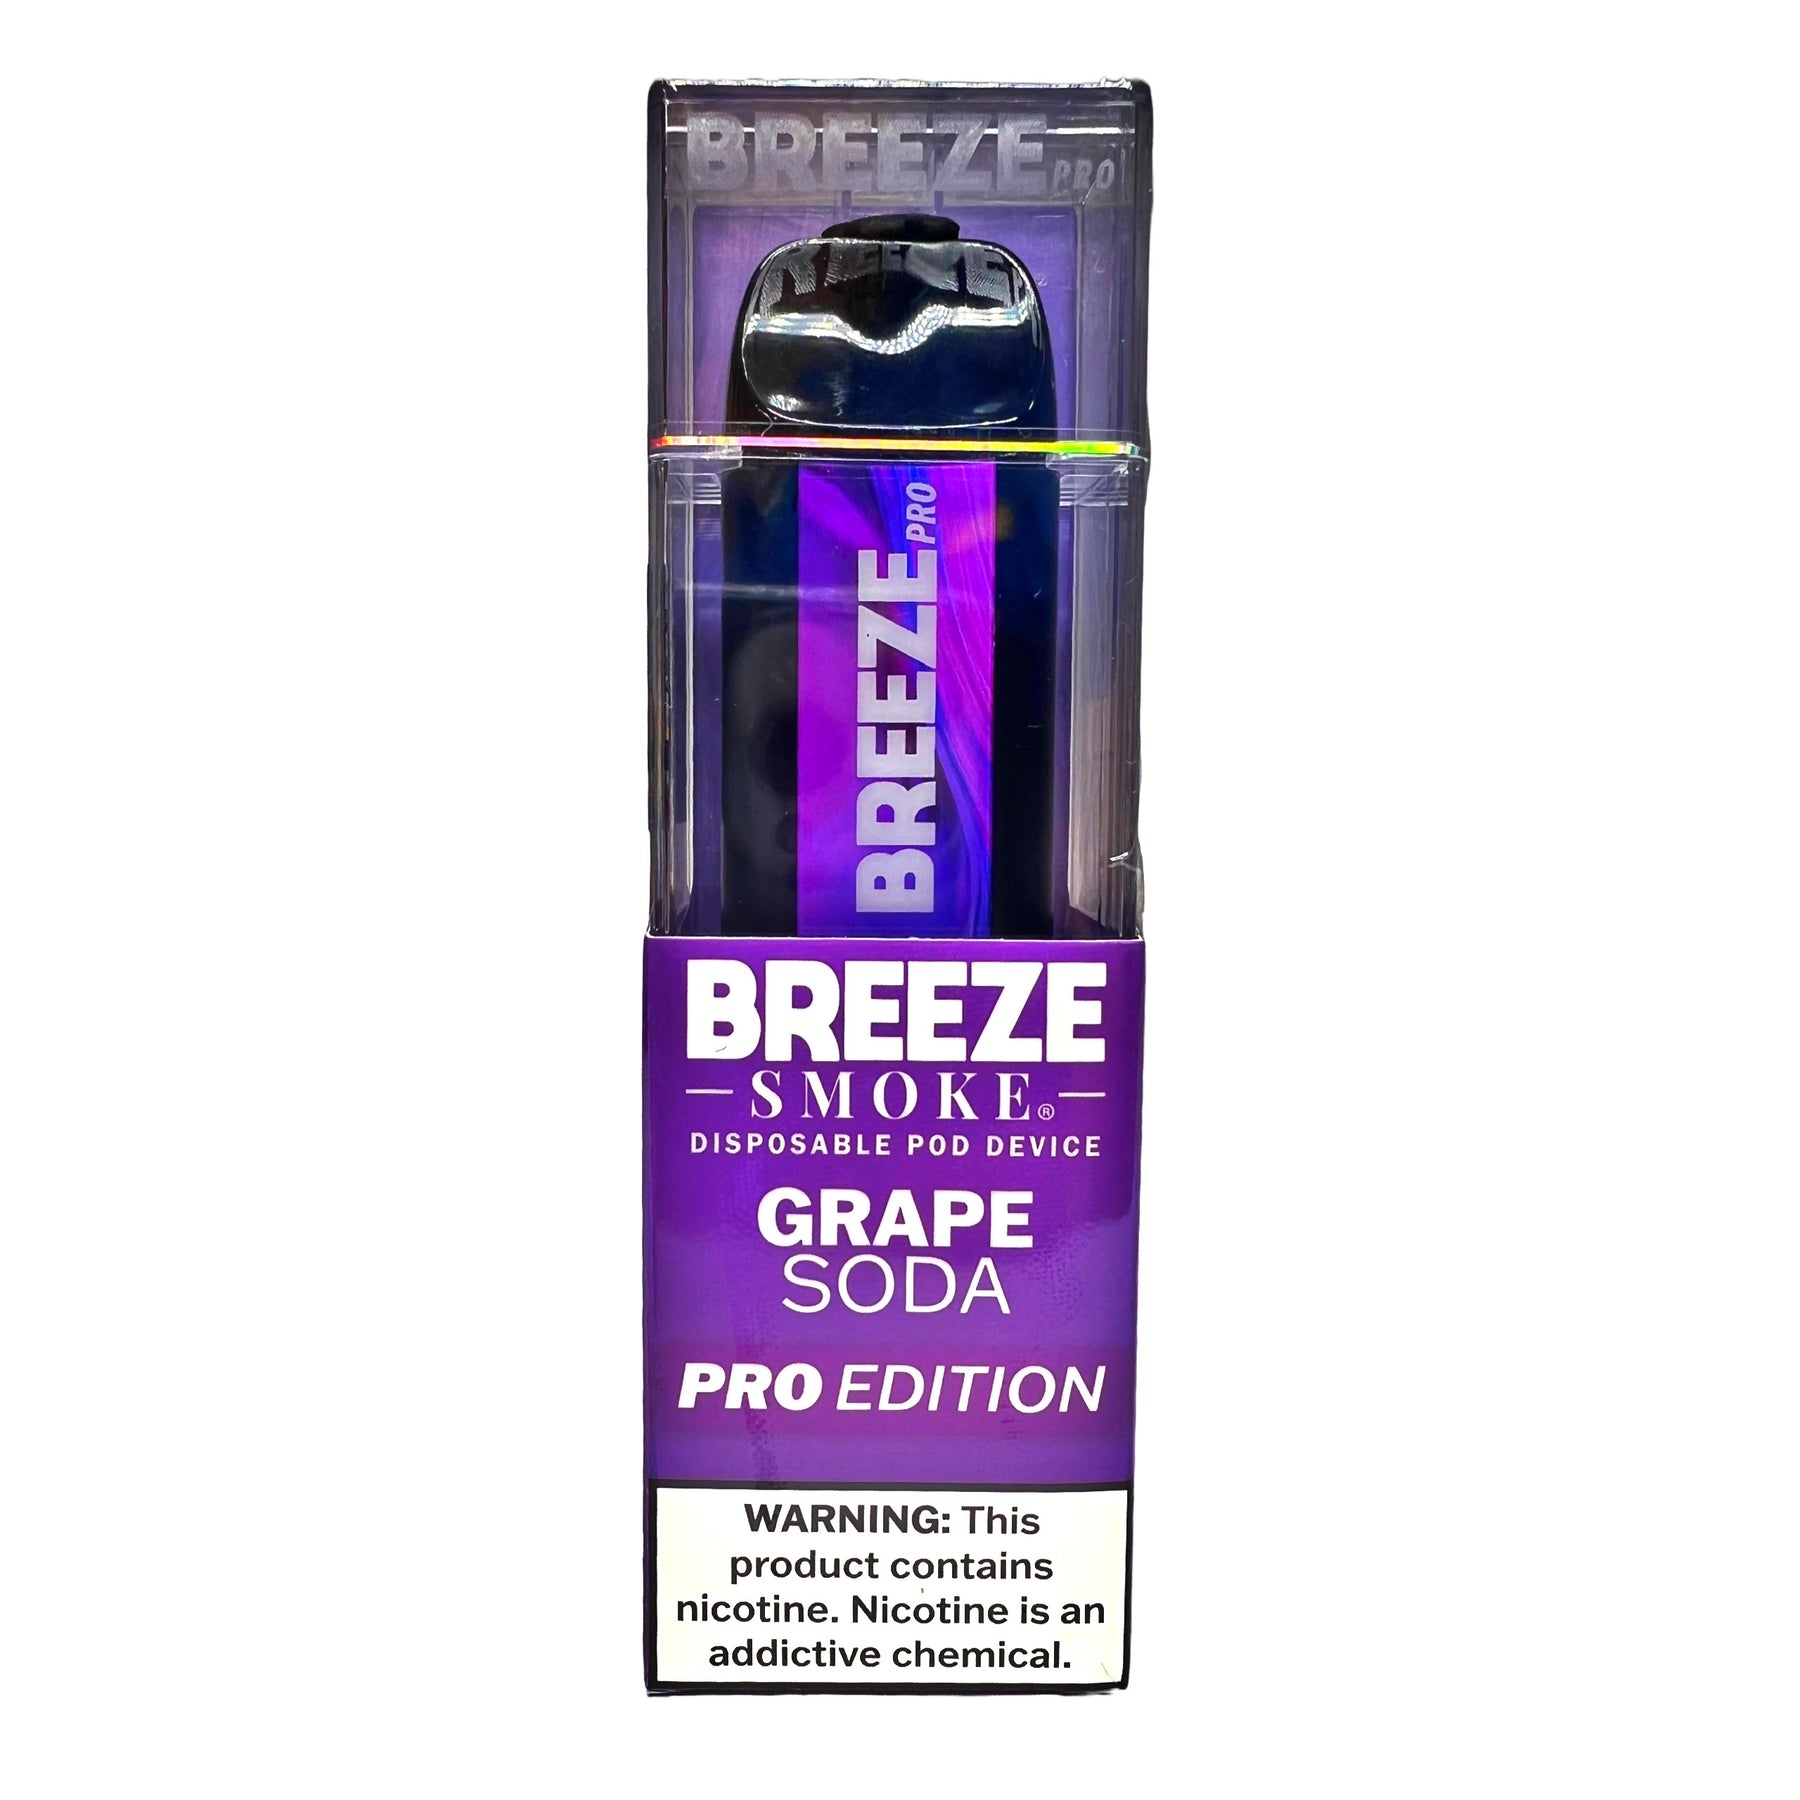 Breeze Pro Flavor Grape Soda